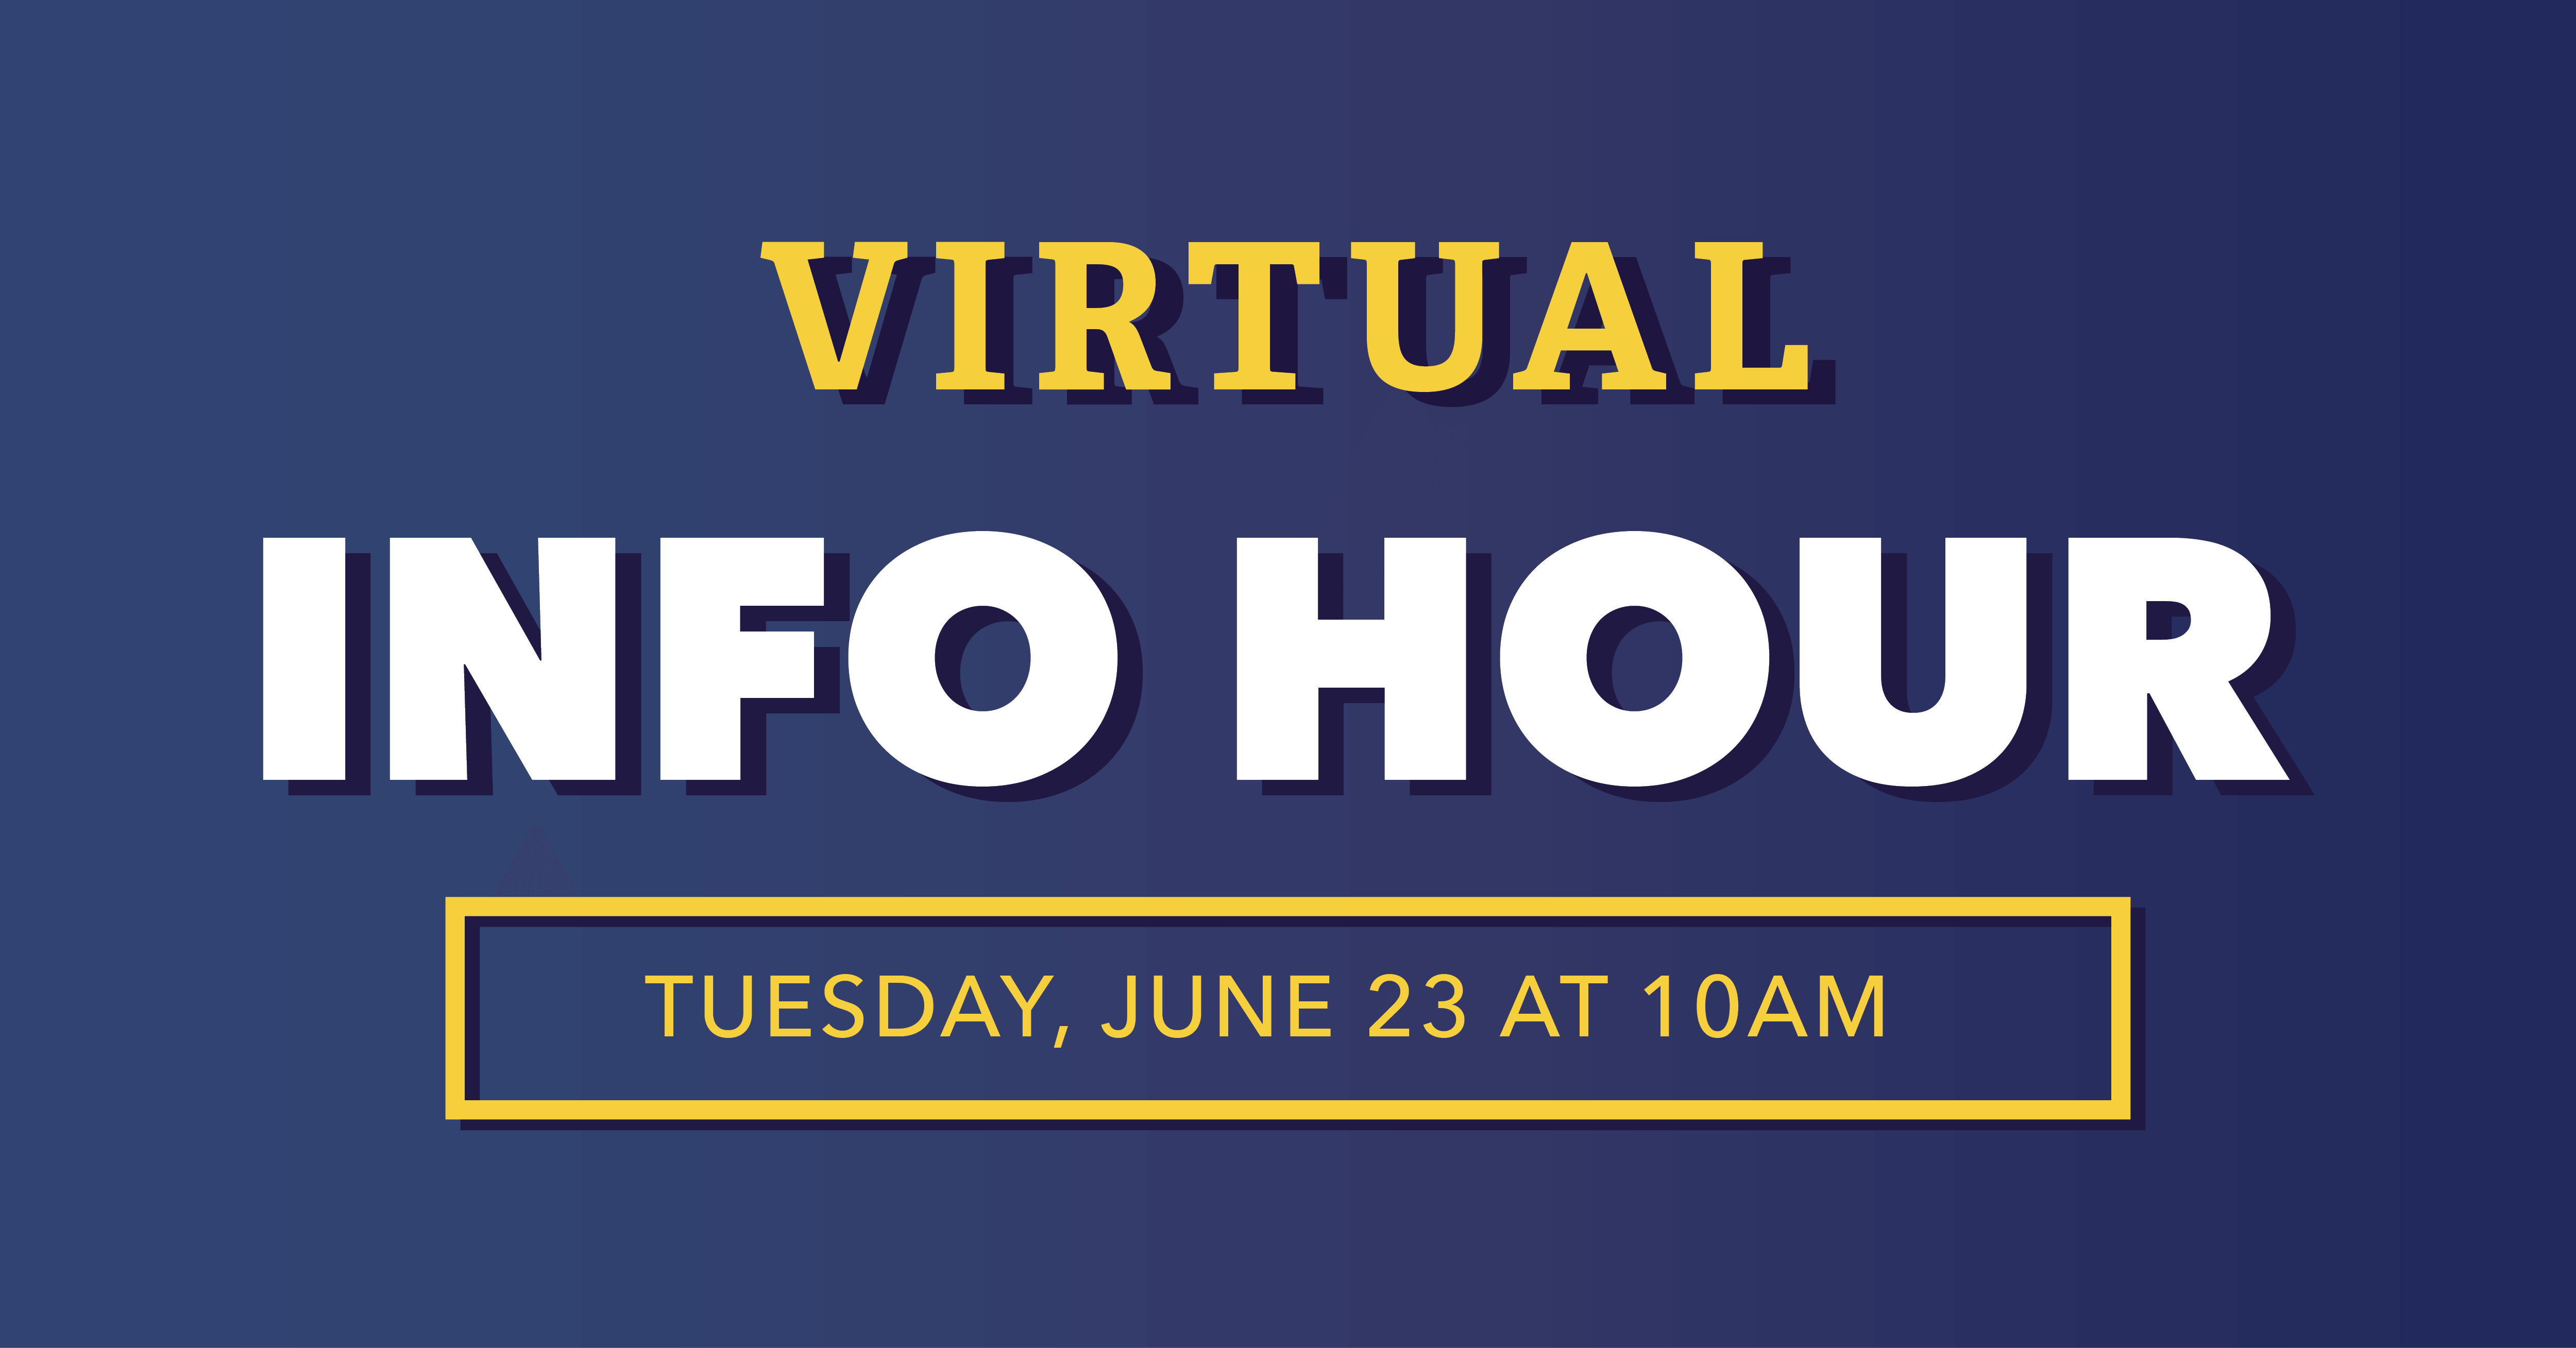 Virtual Info Hour Event Image